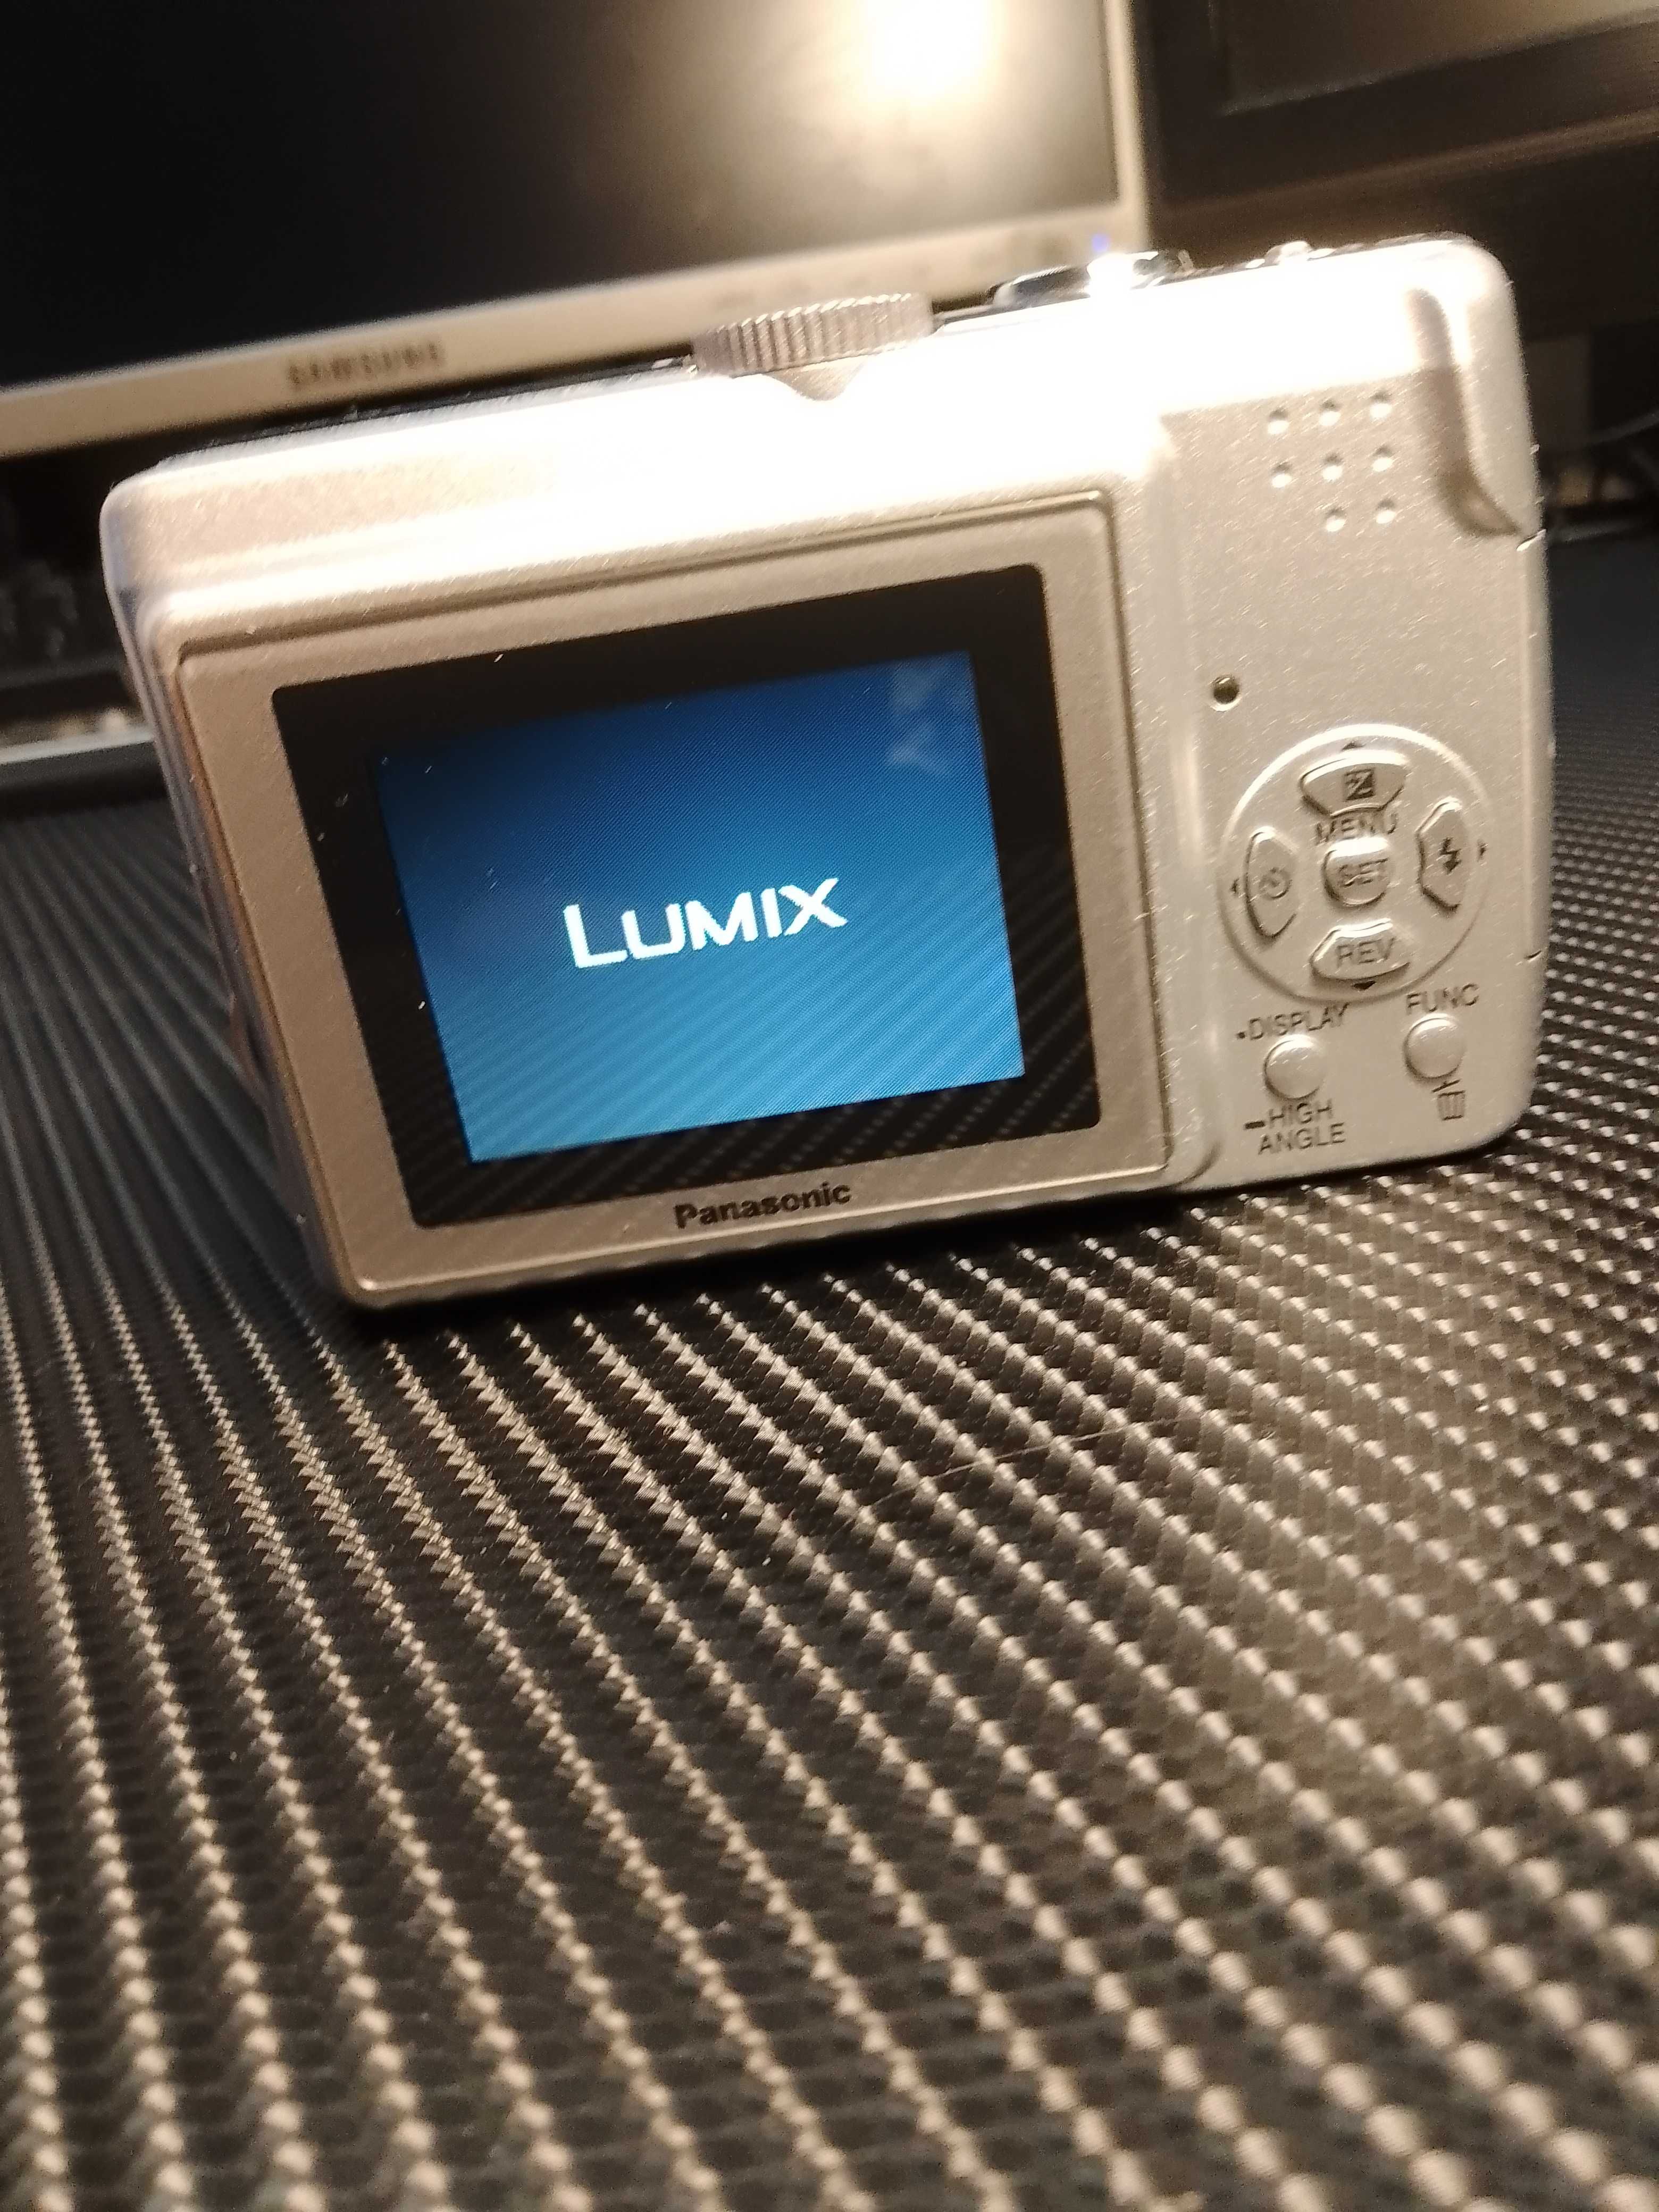 Aparat Panasonic Lumix dmc-lz6